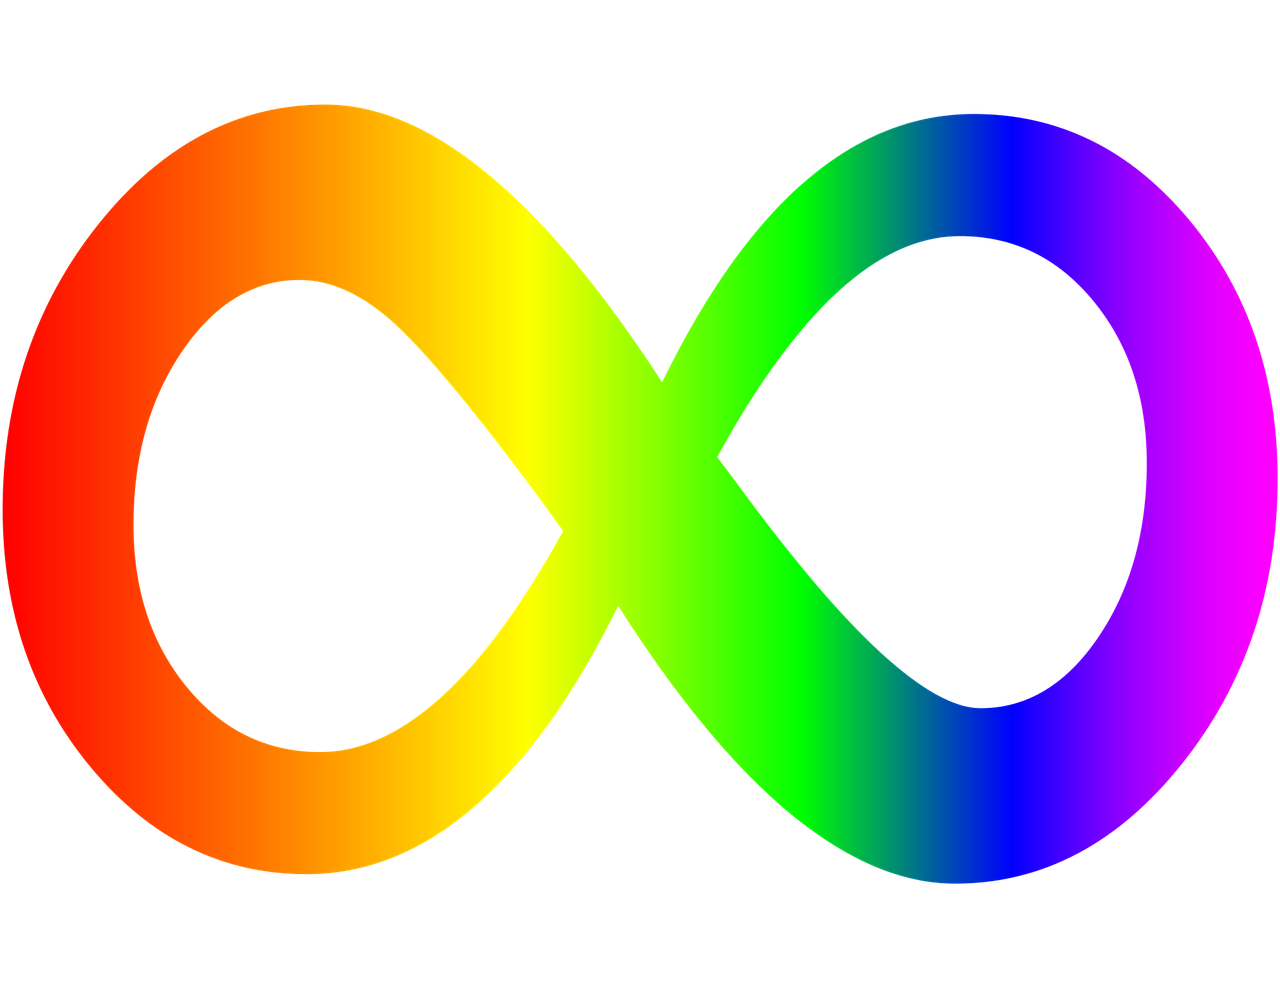 A multi-coloured infinity symbol representing neurodiversity.